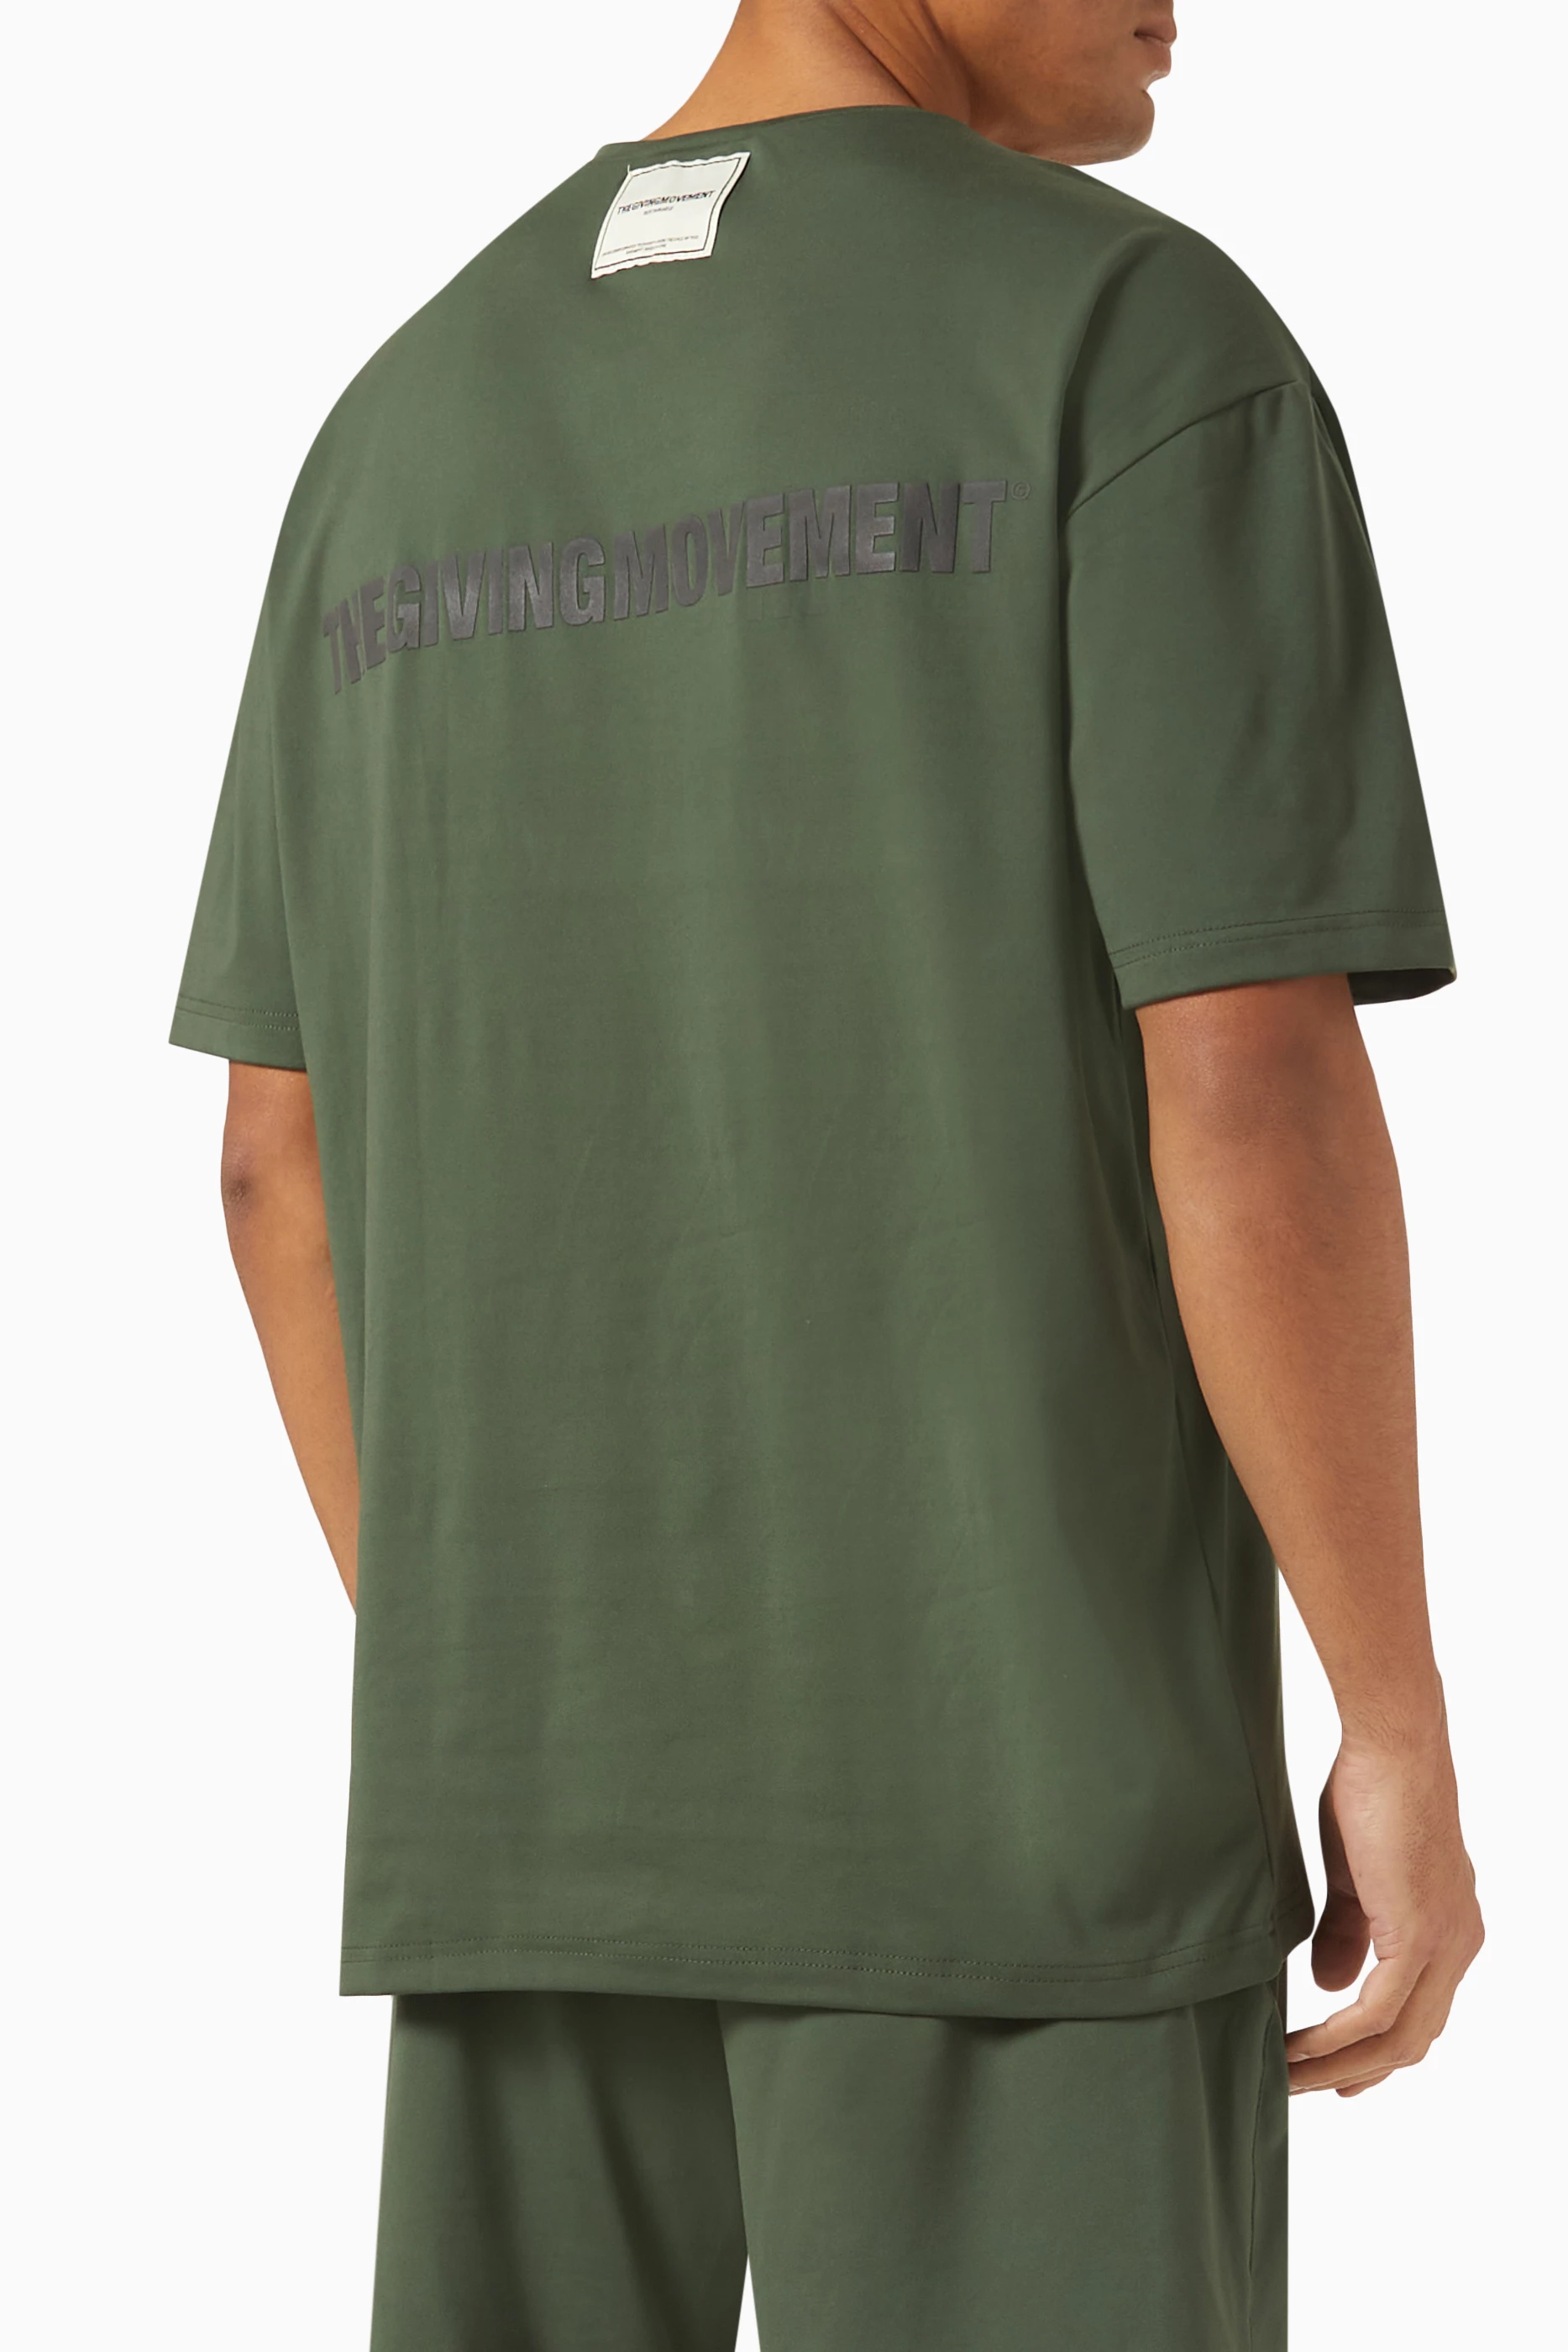 Palm Angels Logo T-shirt Military Green